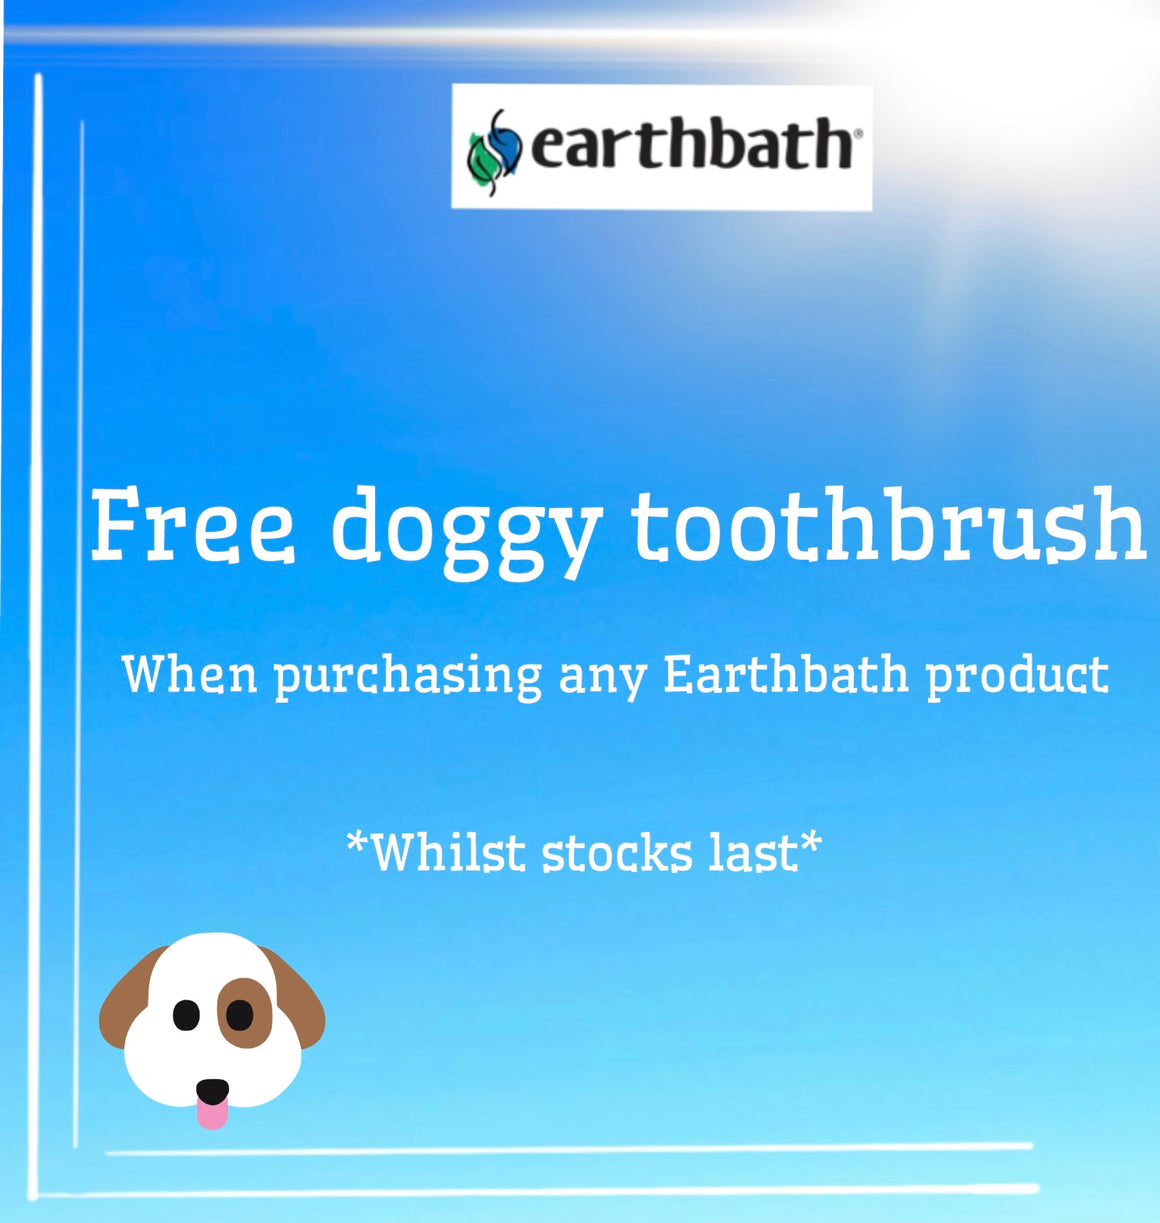 Dog Shampoo Earthbath 2-in-1 Conditioning - Mango Tango 472ml